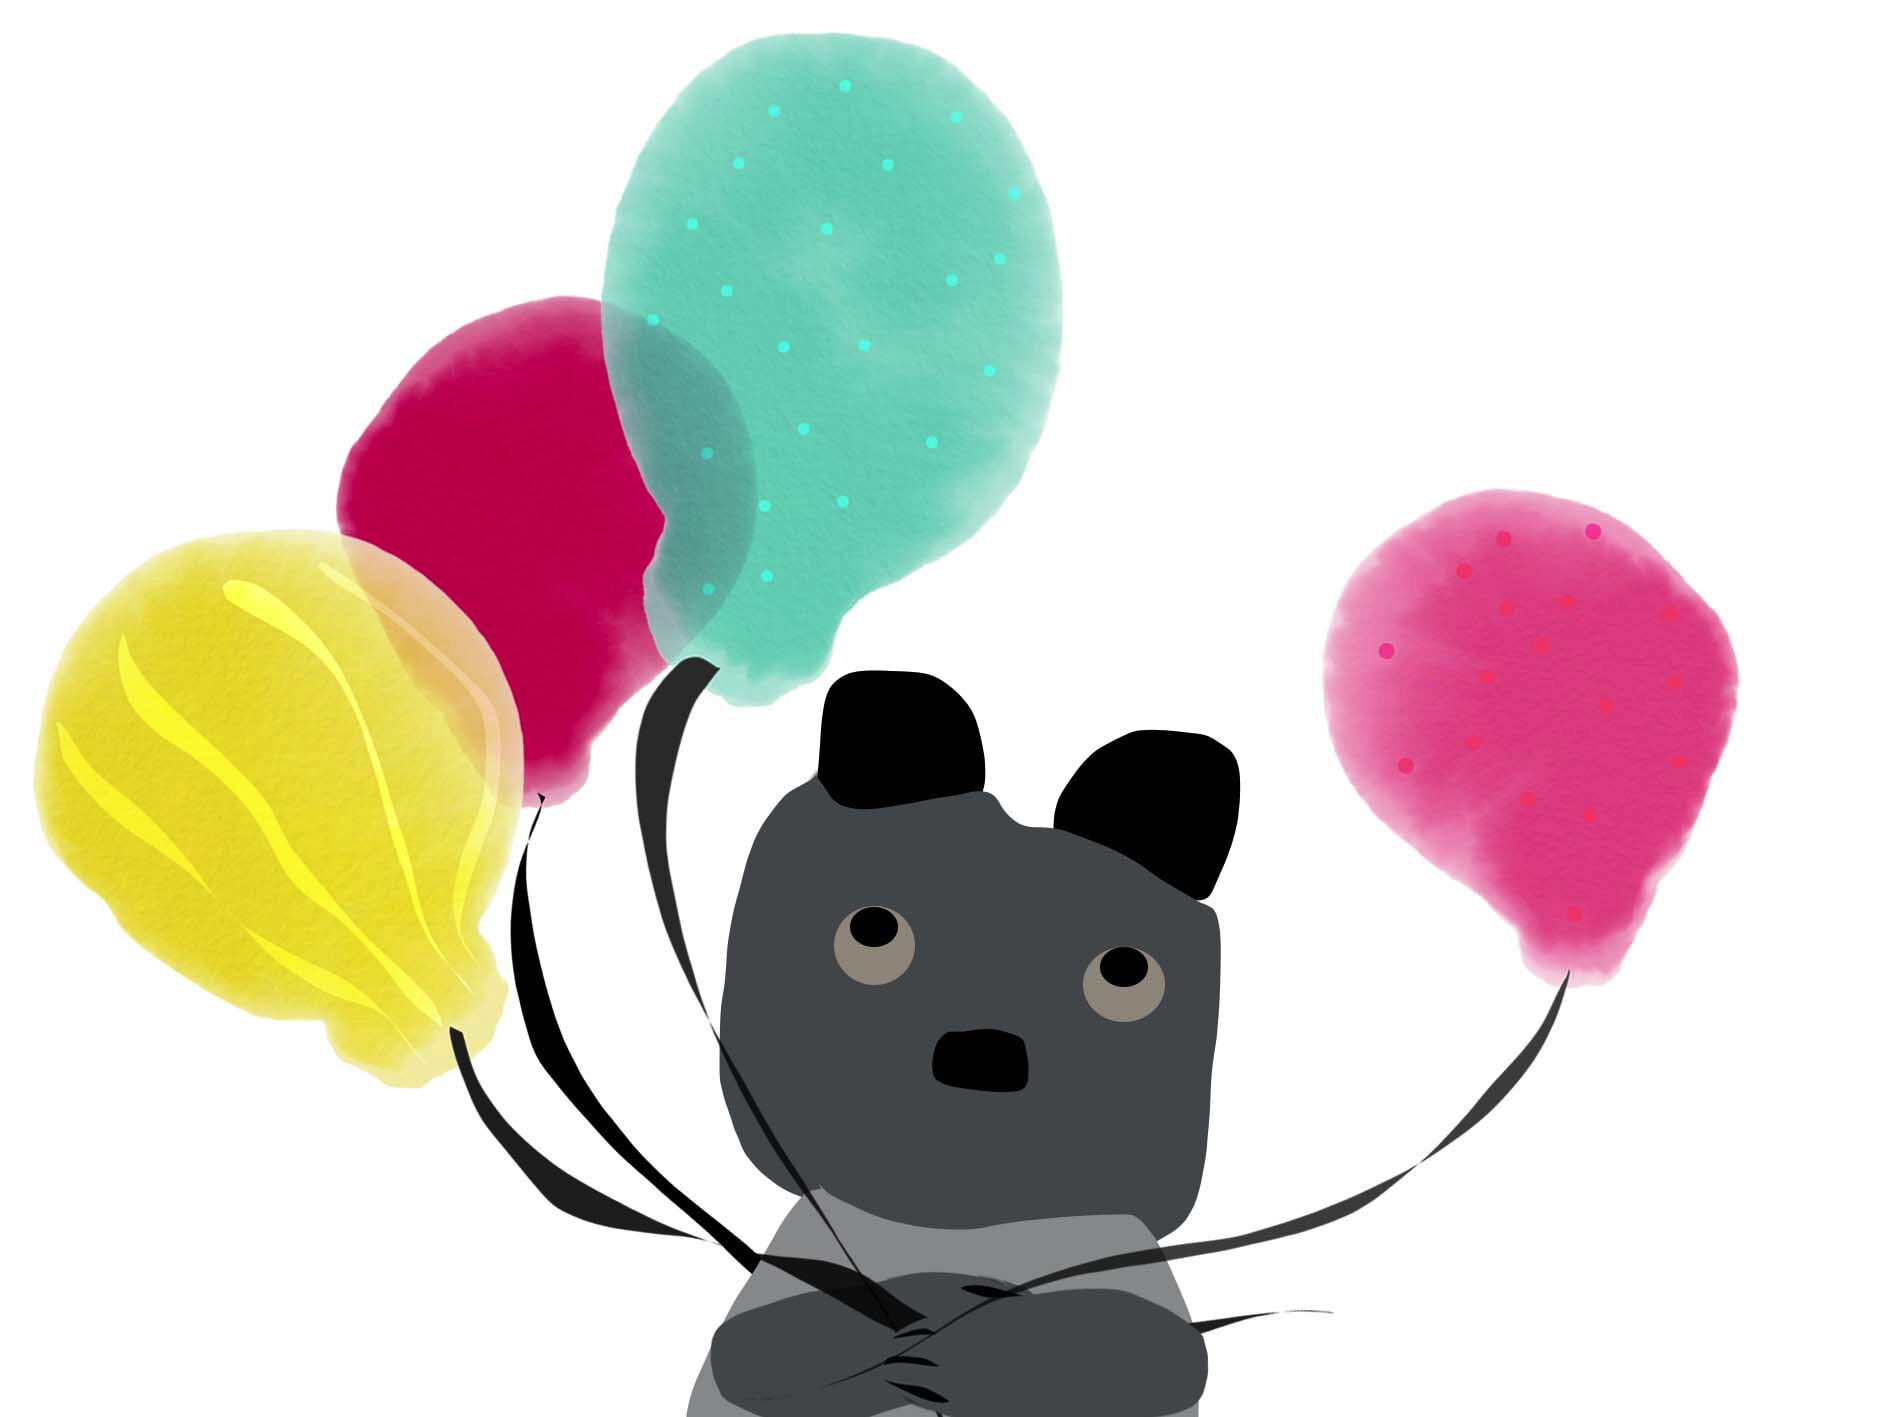 Balloon Bear